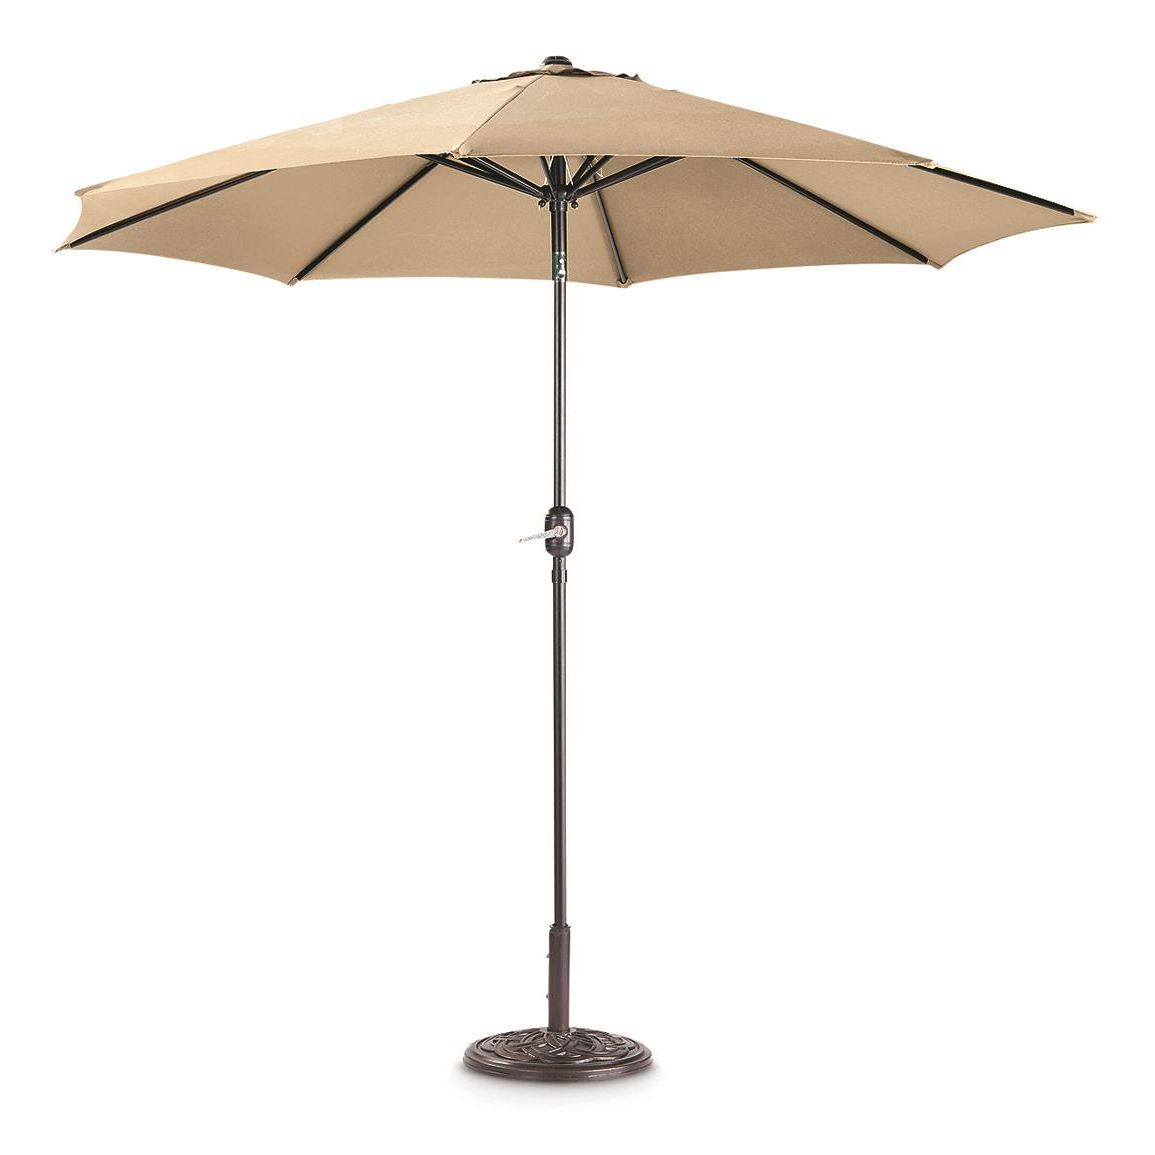 Most Recent Market Umbrellas Throughout Castlecreek 9' Market Patio Umbrella (View 16 of 20)